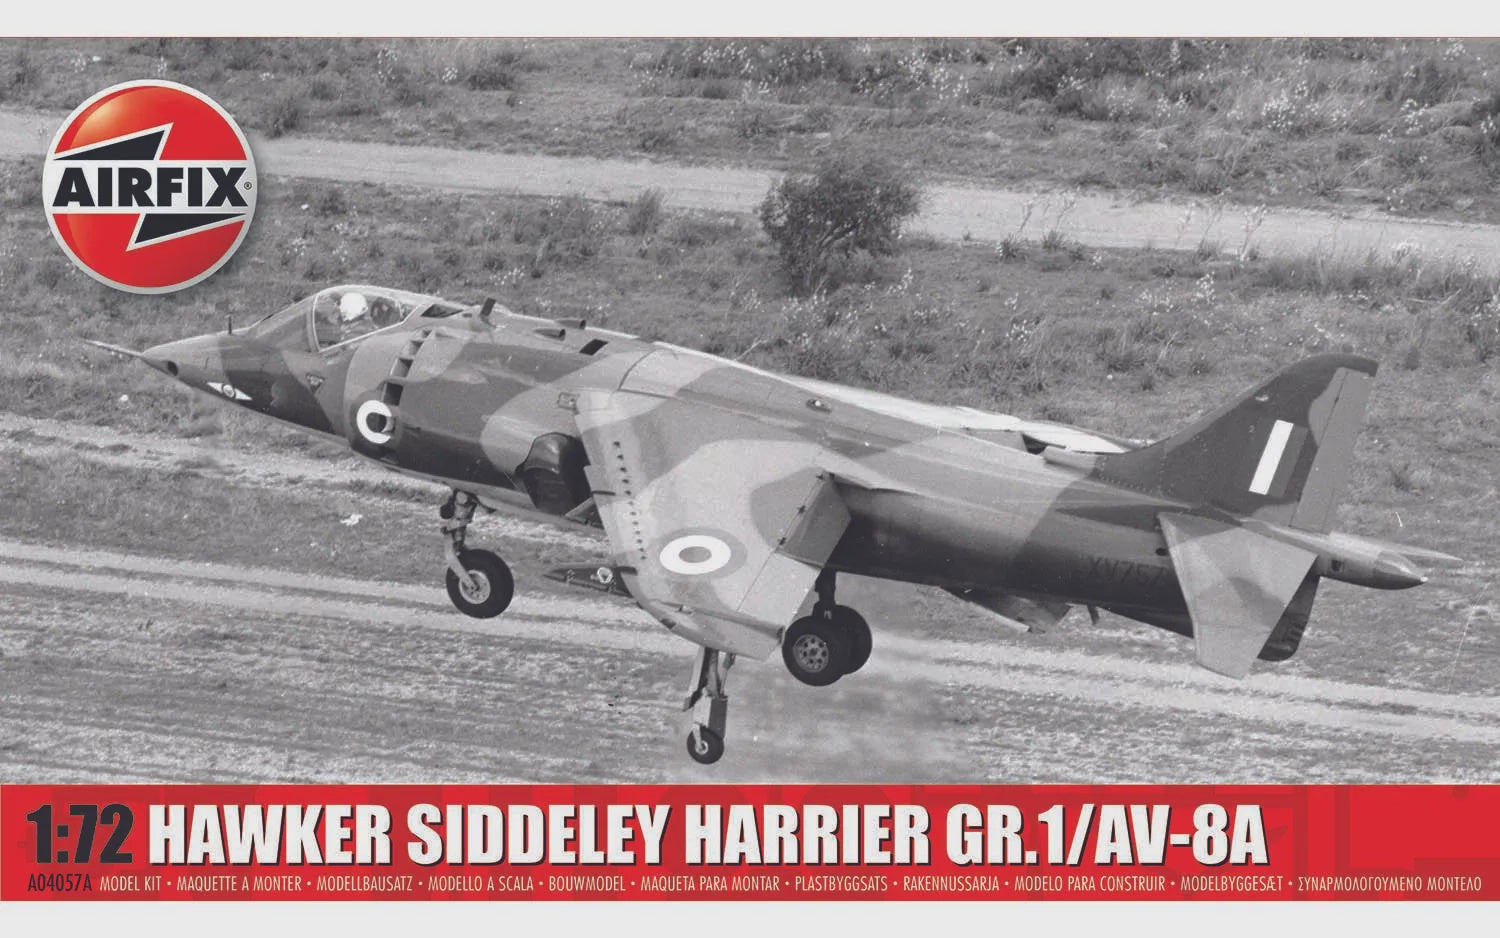 Hawker Siddeley Harrier Gr1 AV-8A 1/72 #04057A by Airfix